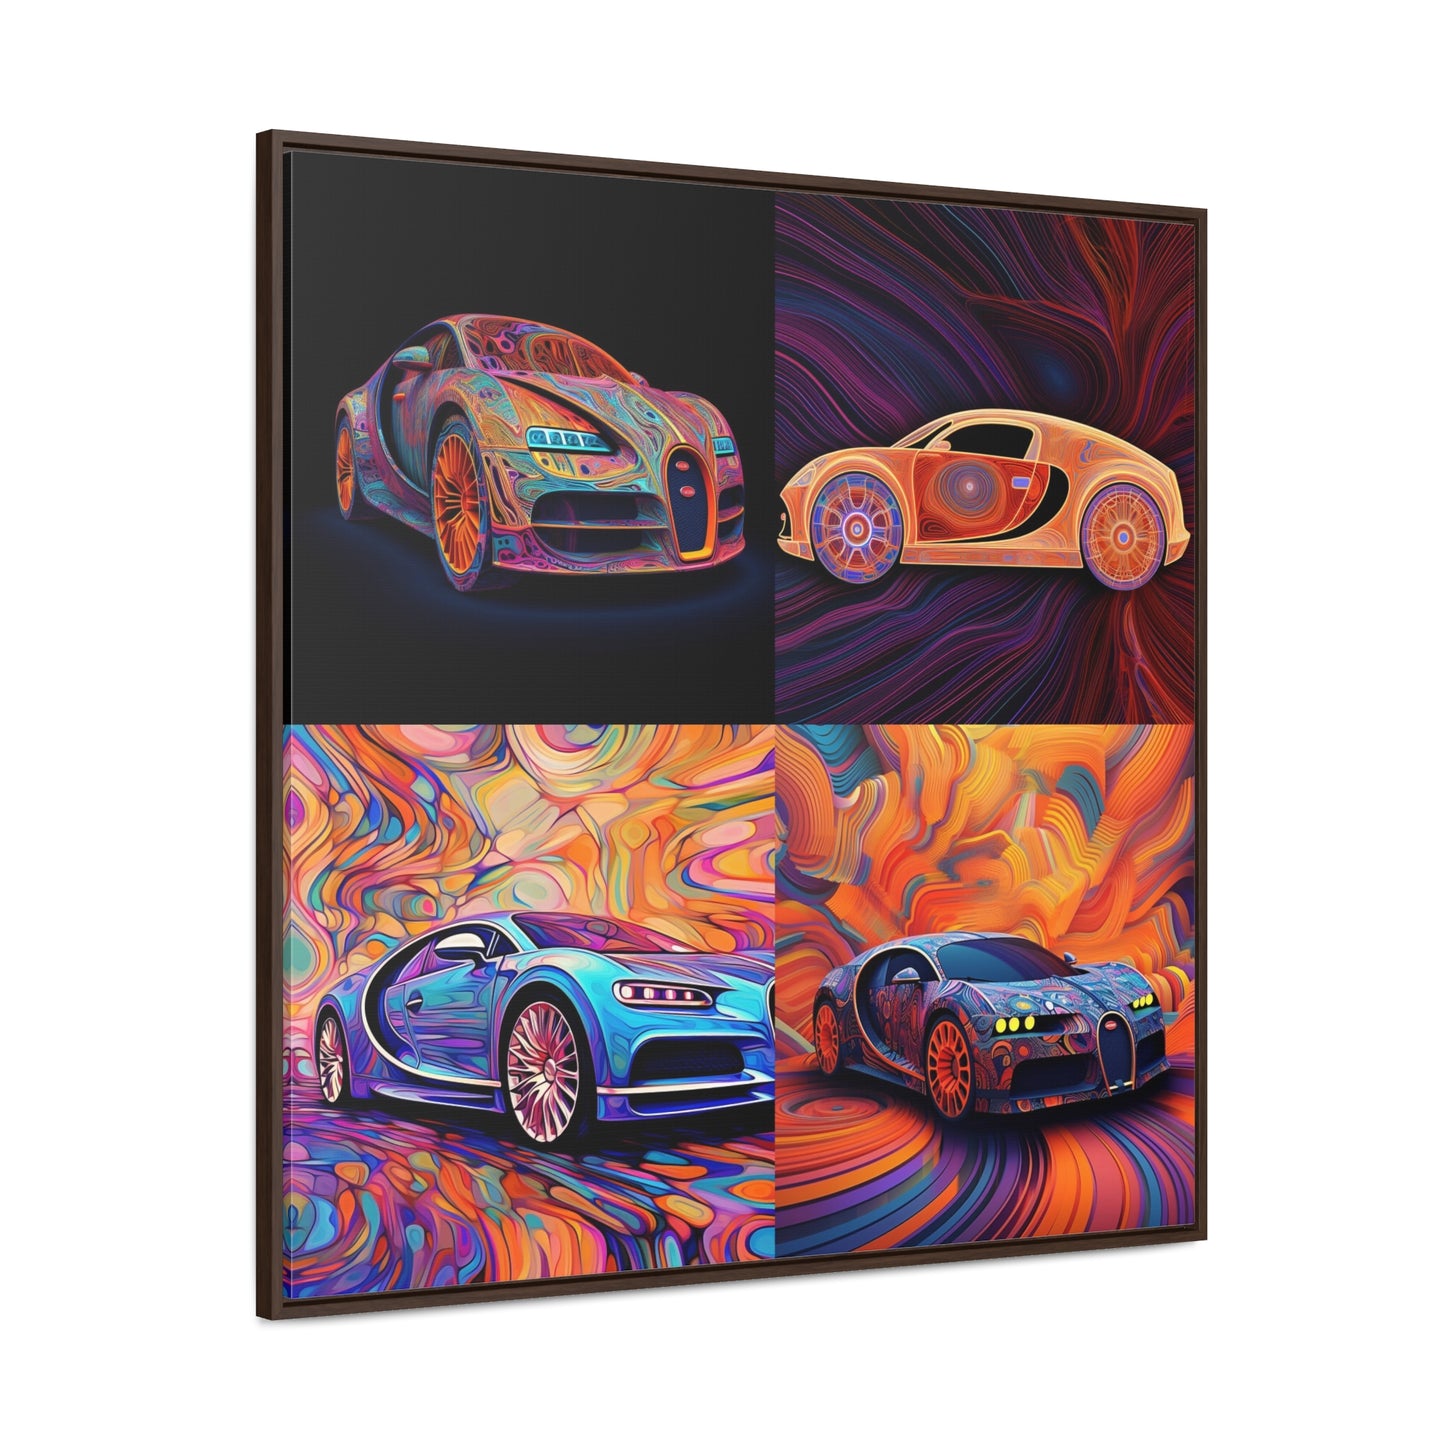 Gallery Canvas Wraps, Square Frame Bugatti Abstract Concept 5